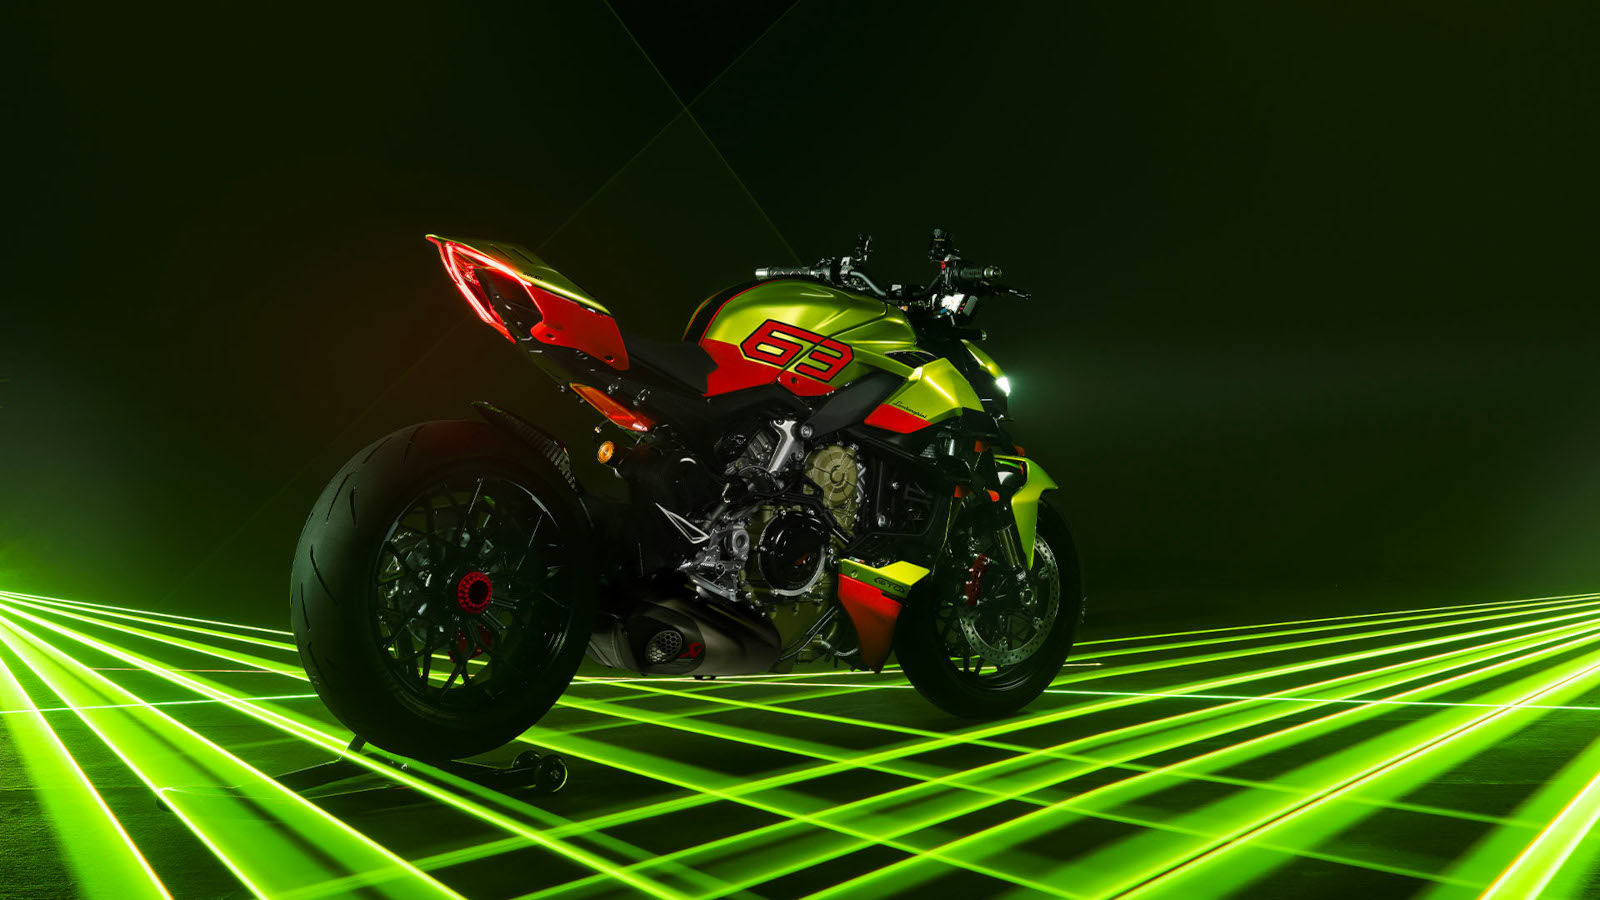 Ducati Streetfighter V4S: Enhanced Track Performance Meets Street Elegance